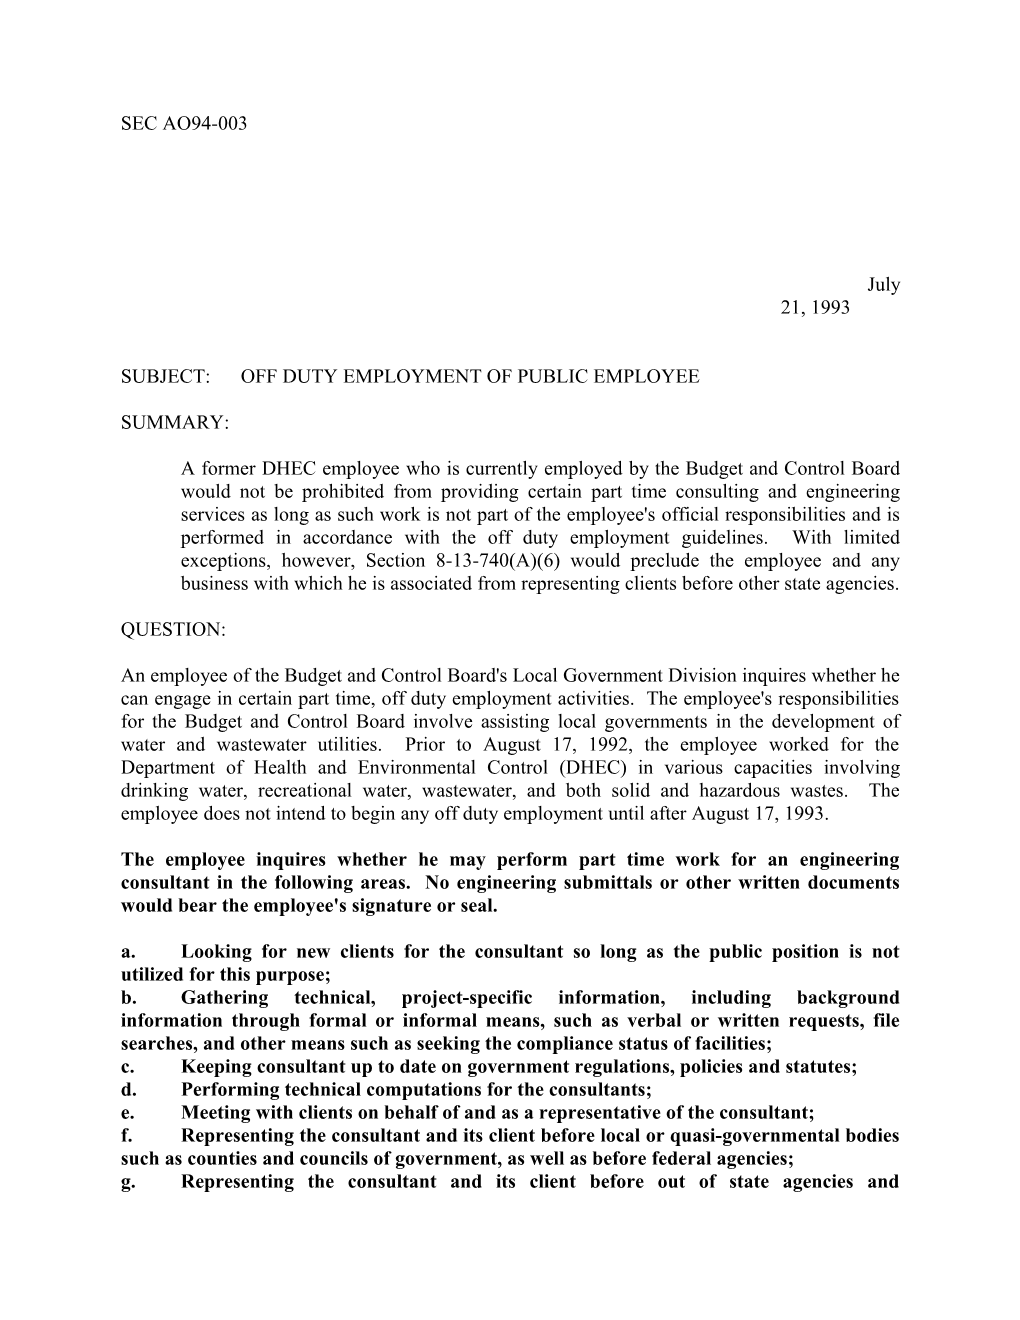 Subject: Off Duty Employment of Public Employee